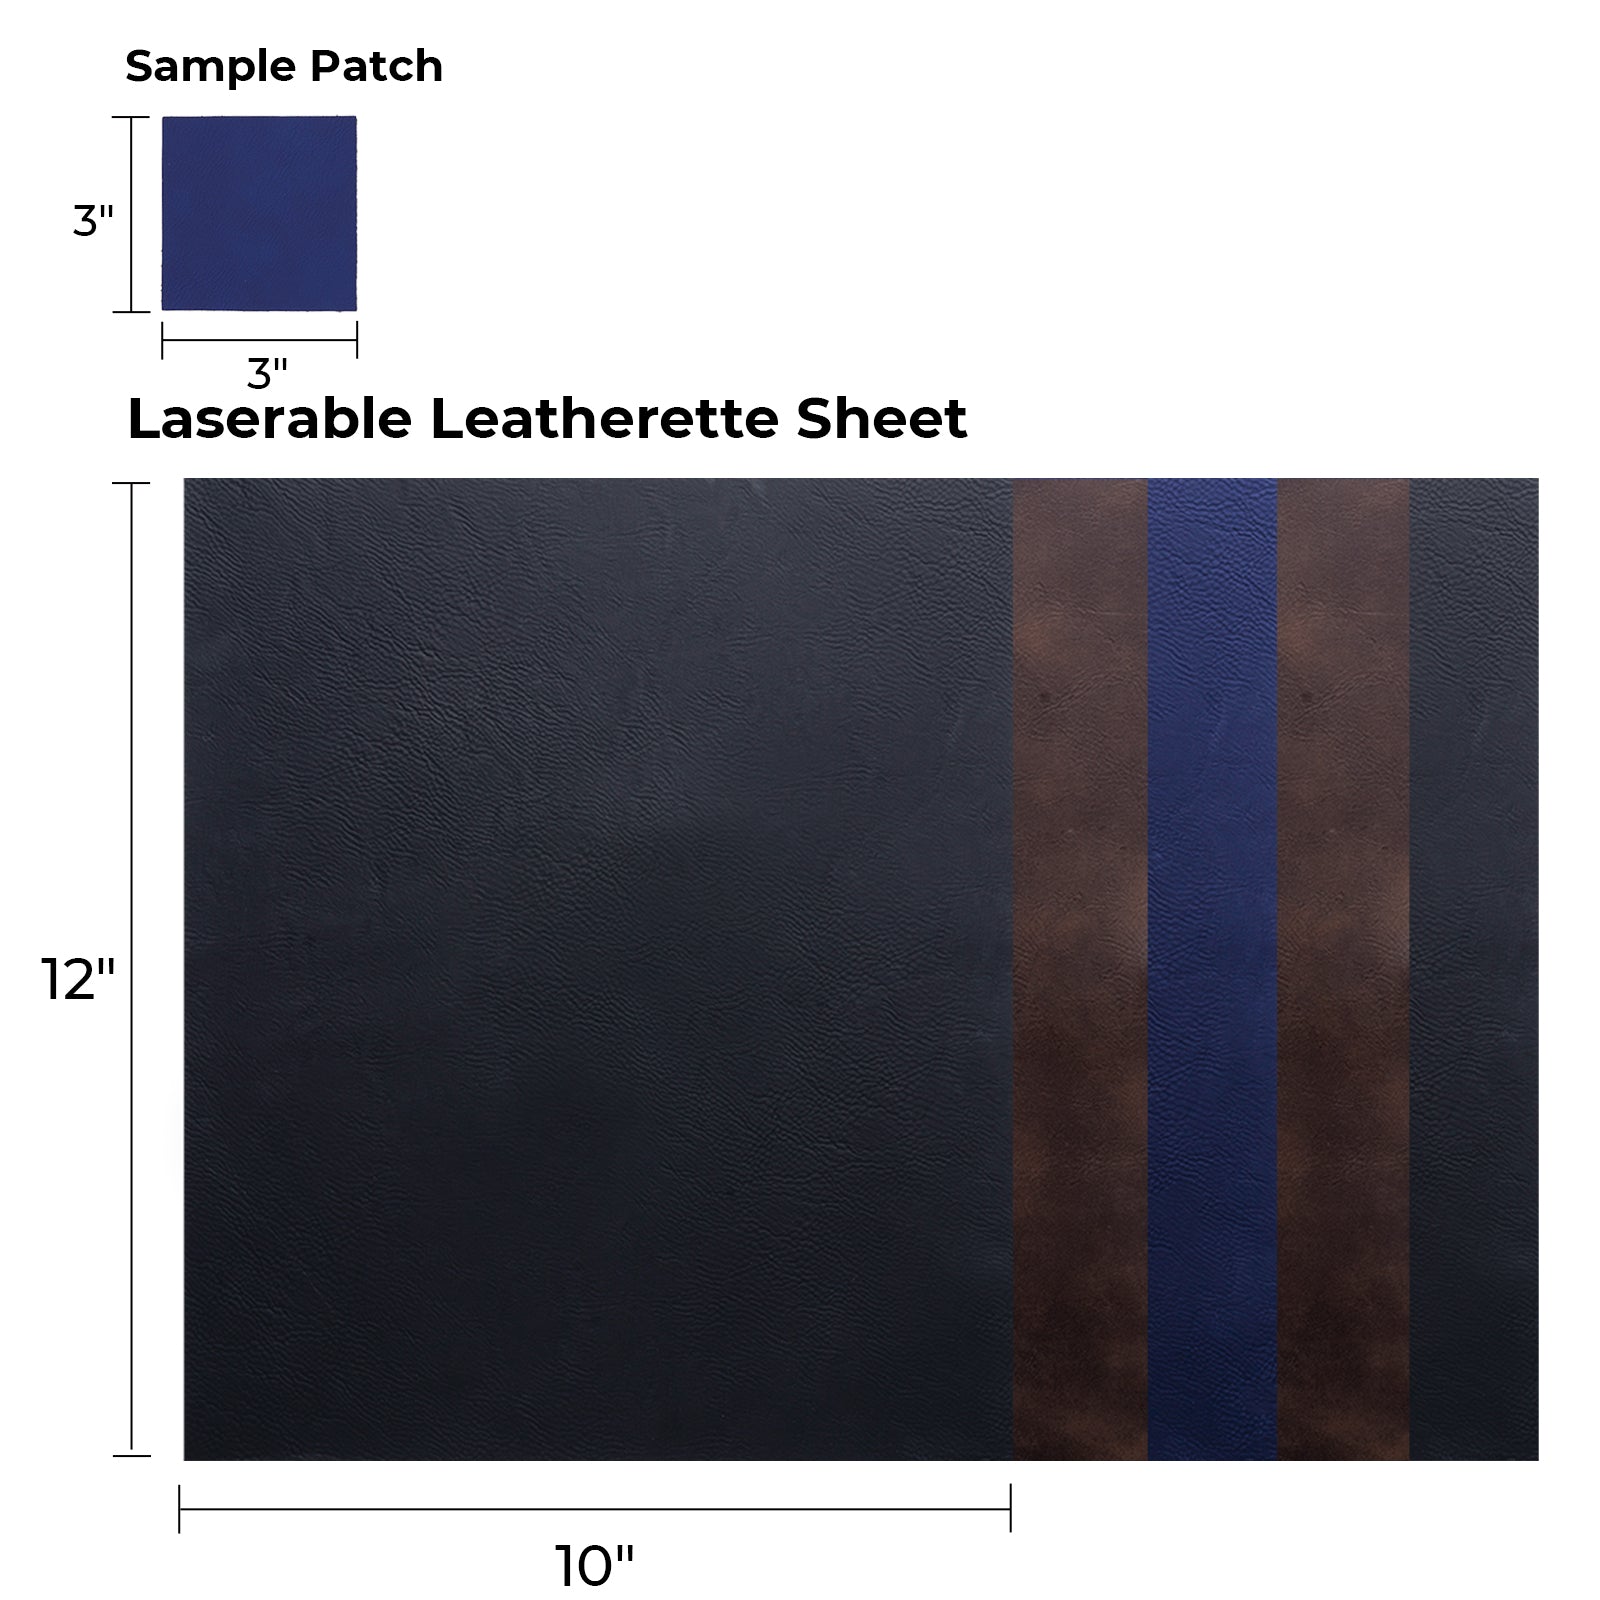 Laserable Leatherette Sheet (5pcs)